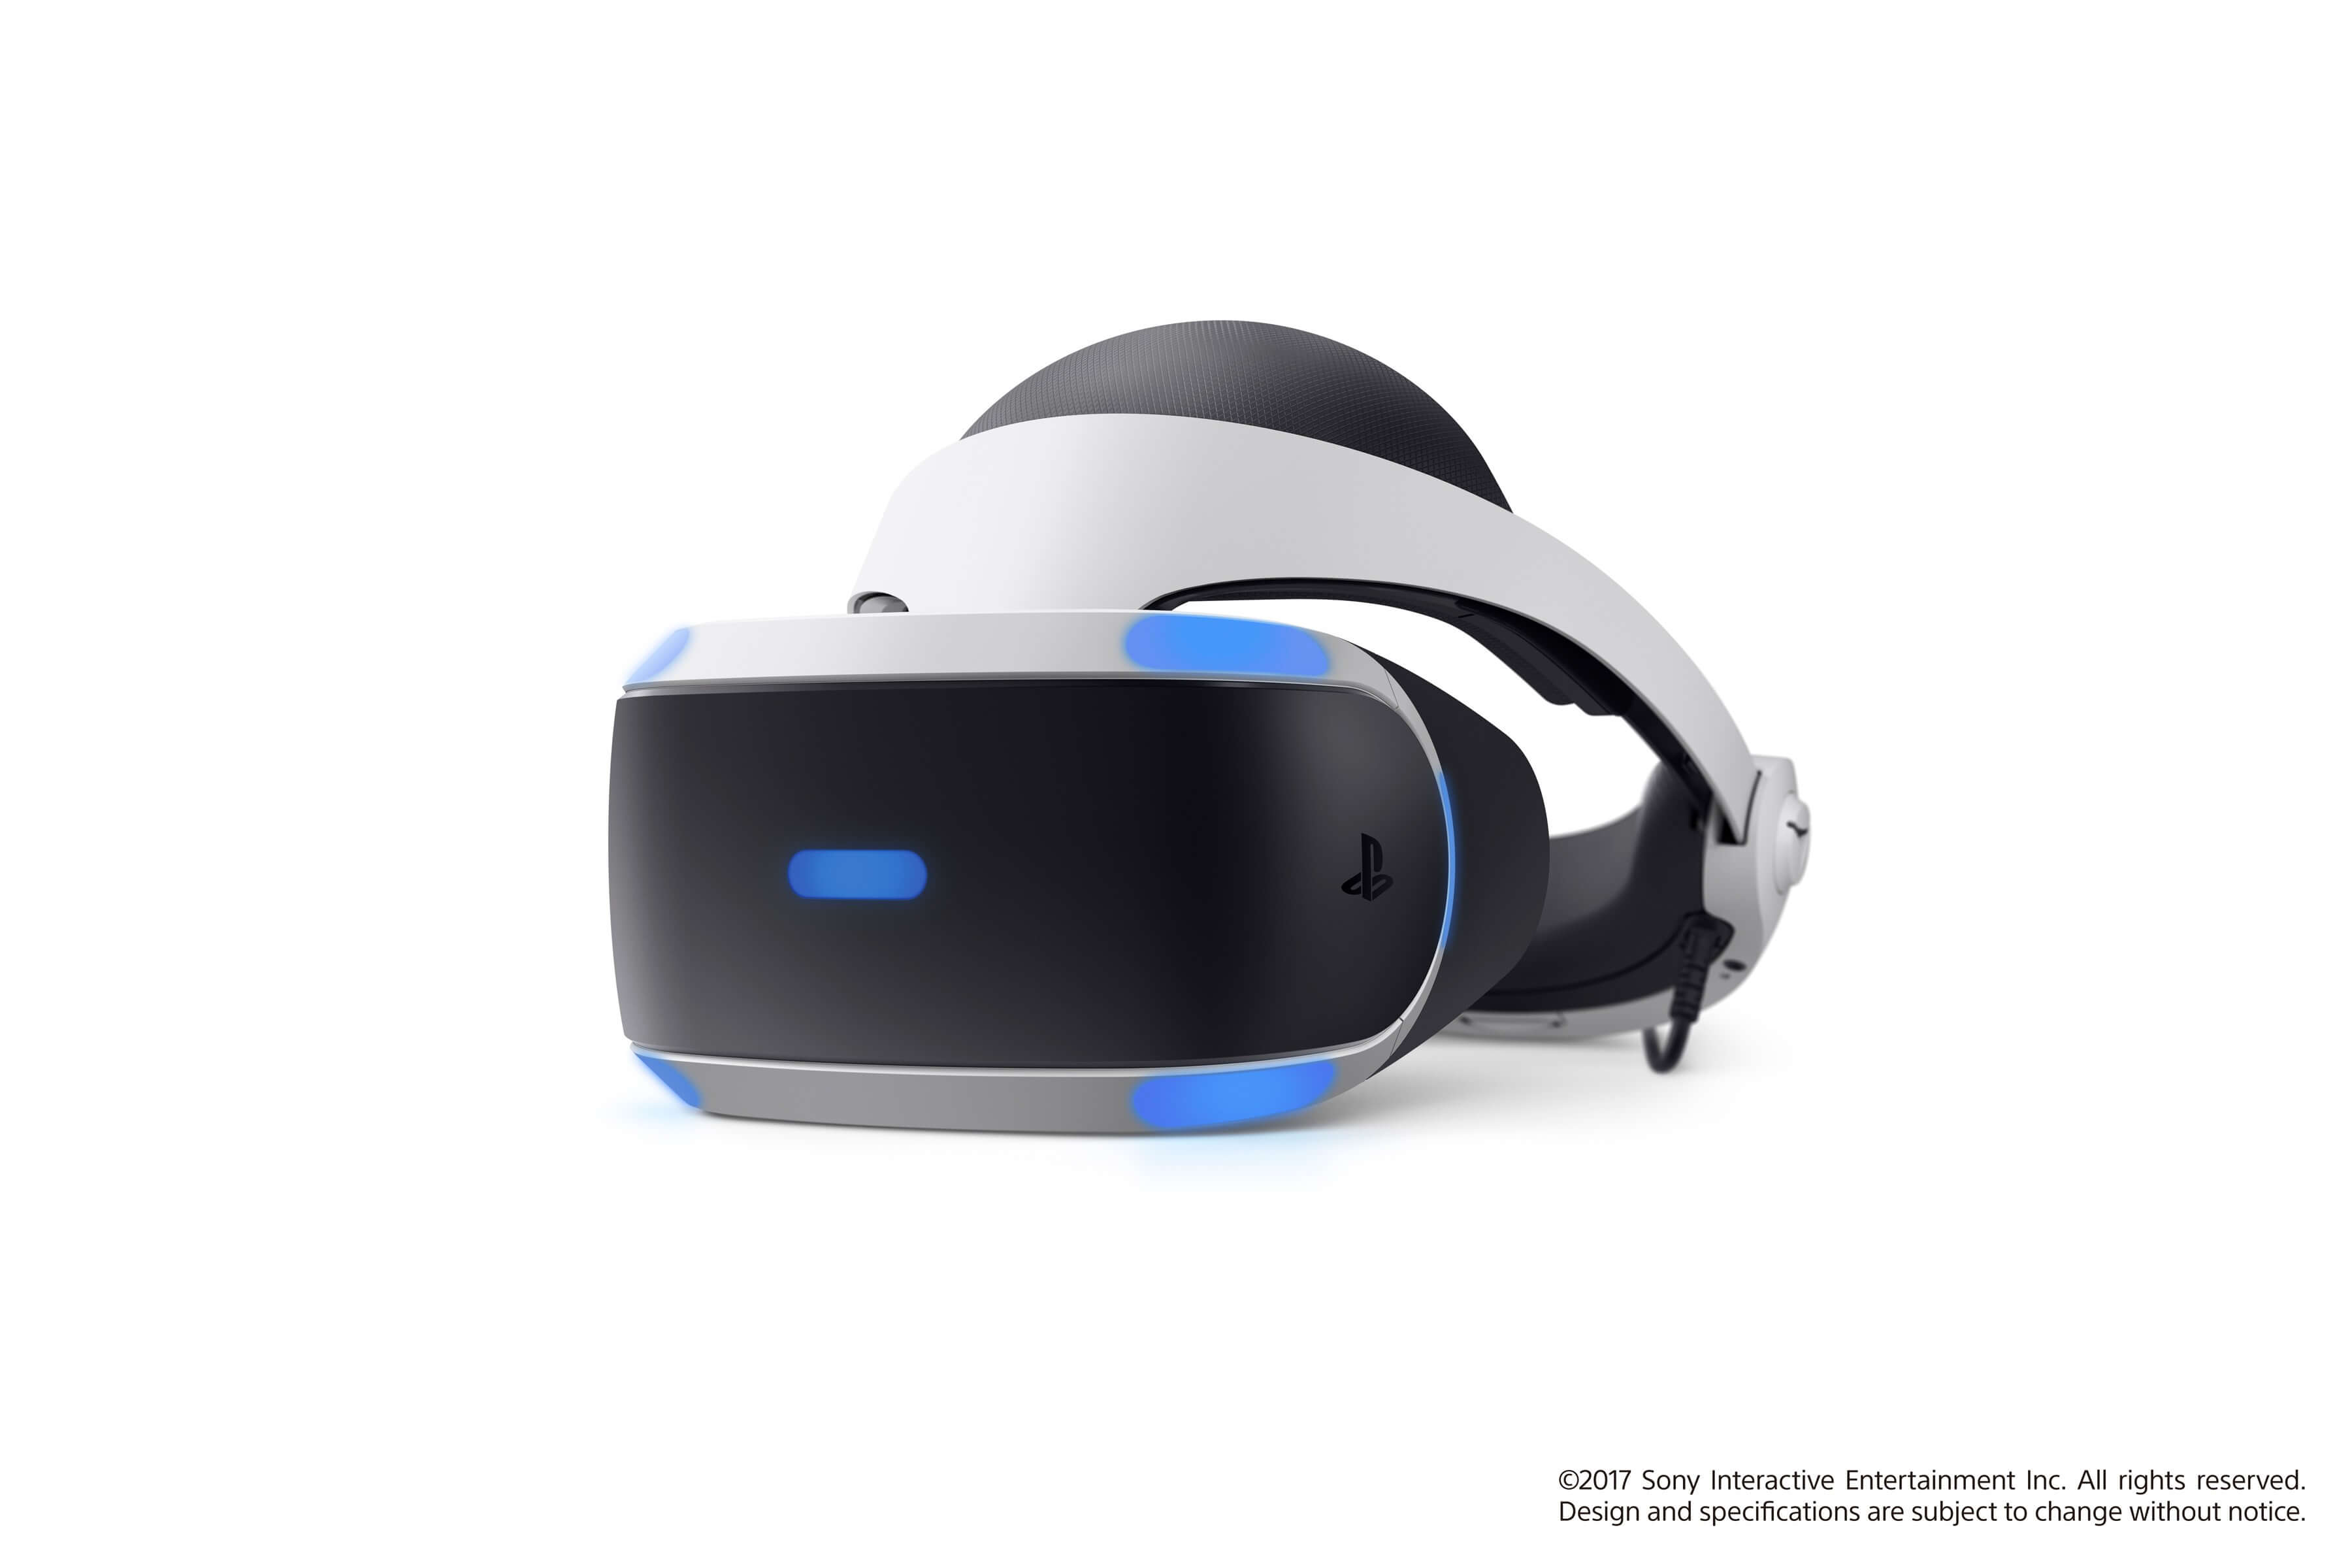 PlayStation VR NEW MEGA PACK + CAMERA + 5 VR GAMES